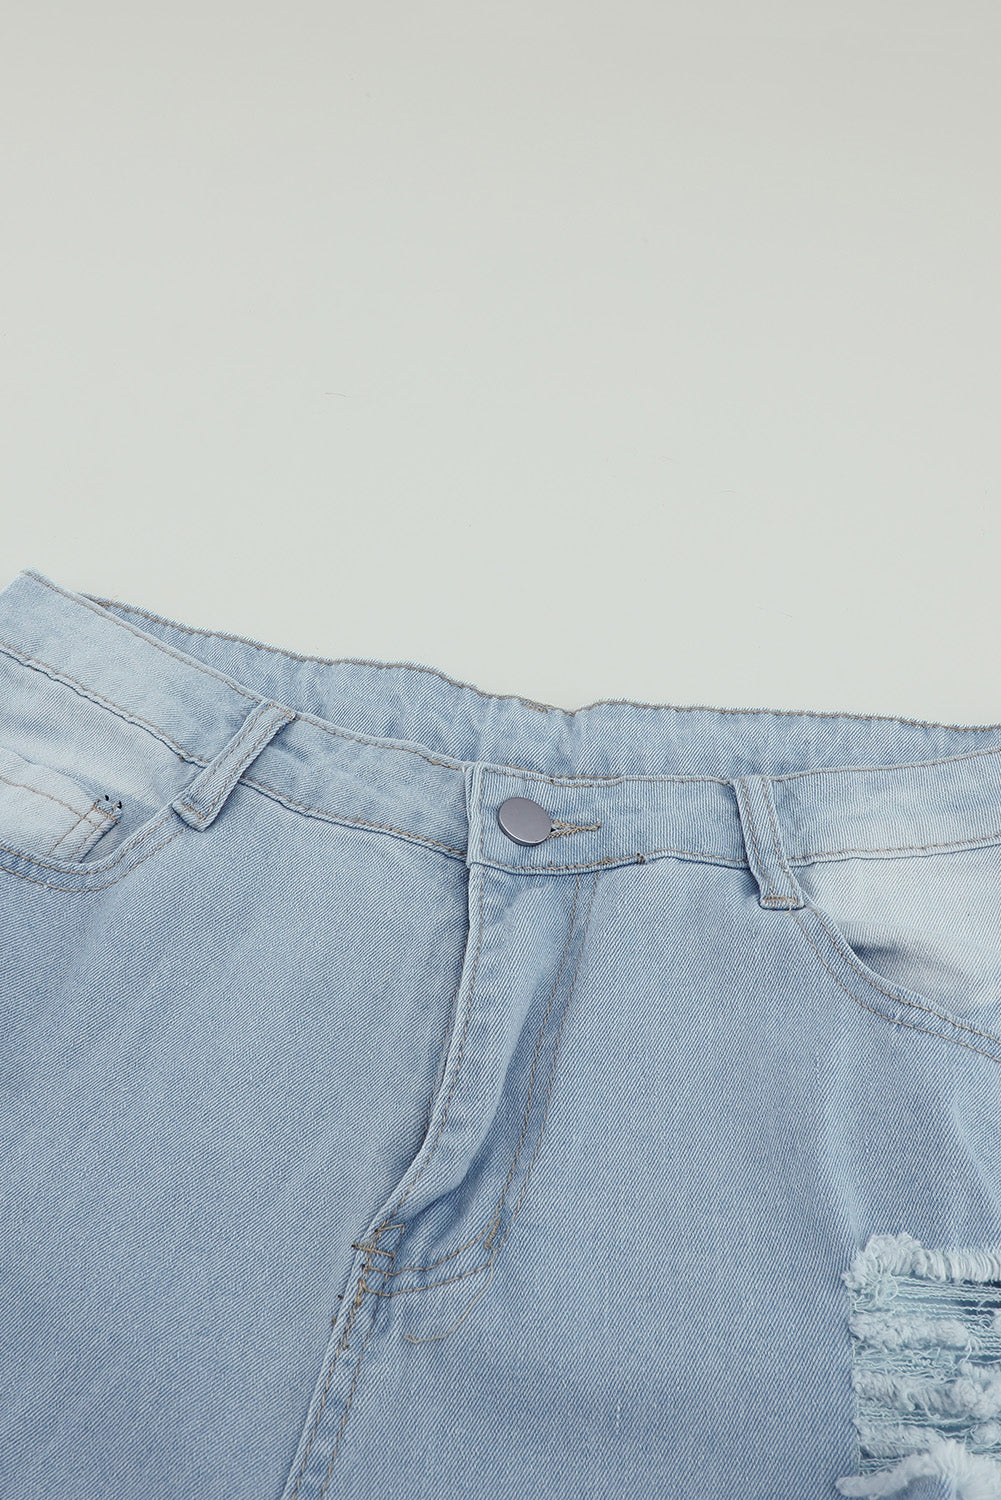 Sky Blue Women's Ripped Denim Pants Casual Bell Bottom Jeans for Women LC78092-4